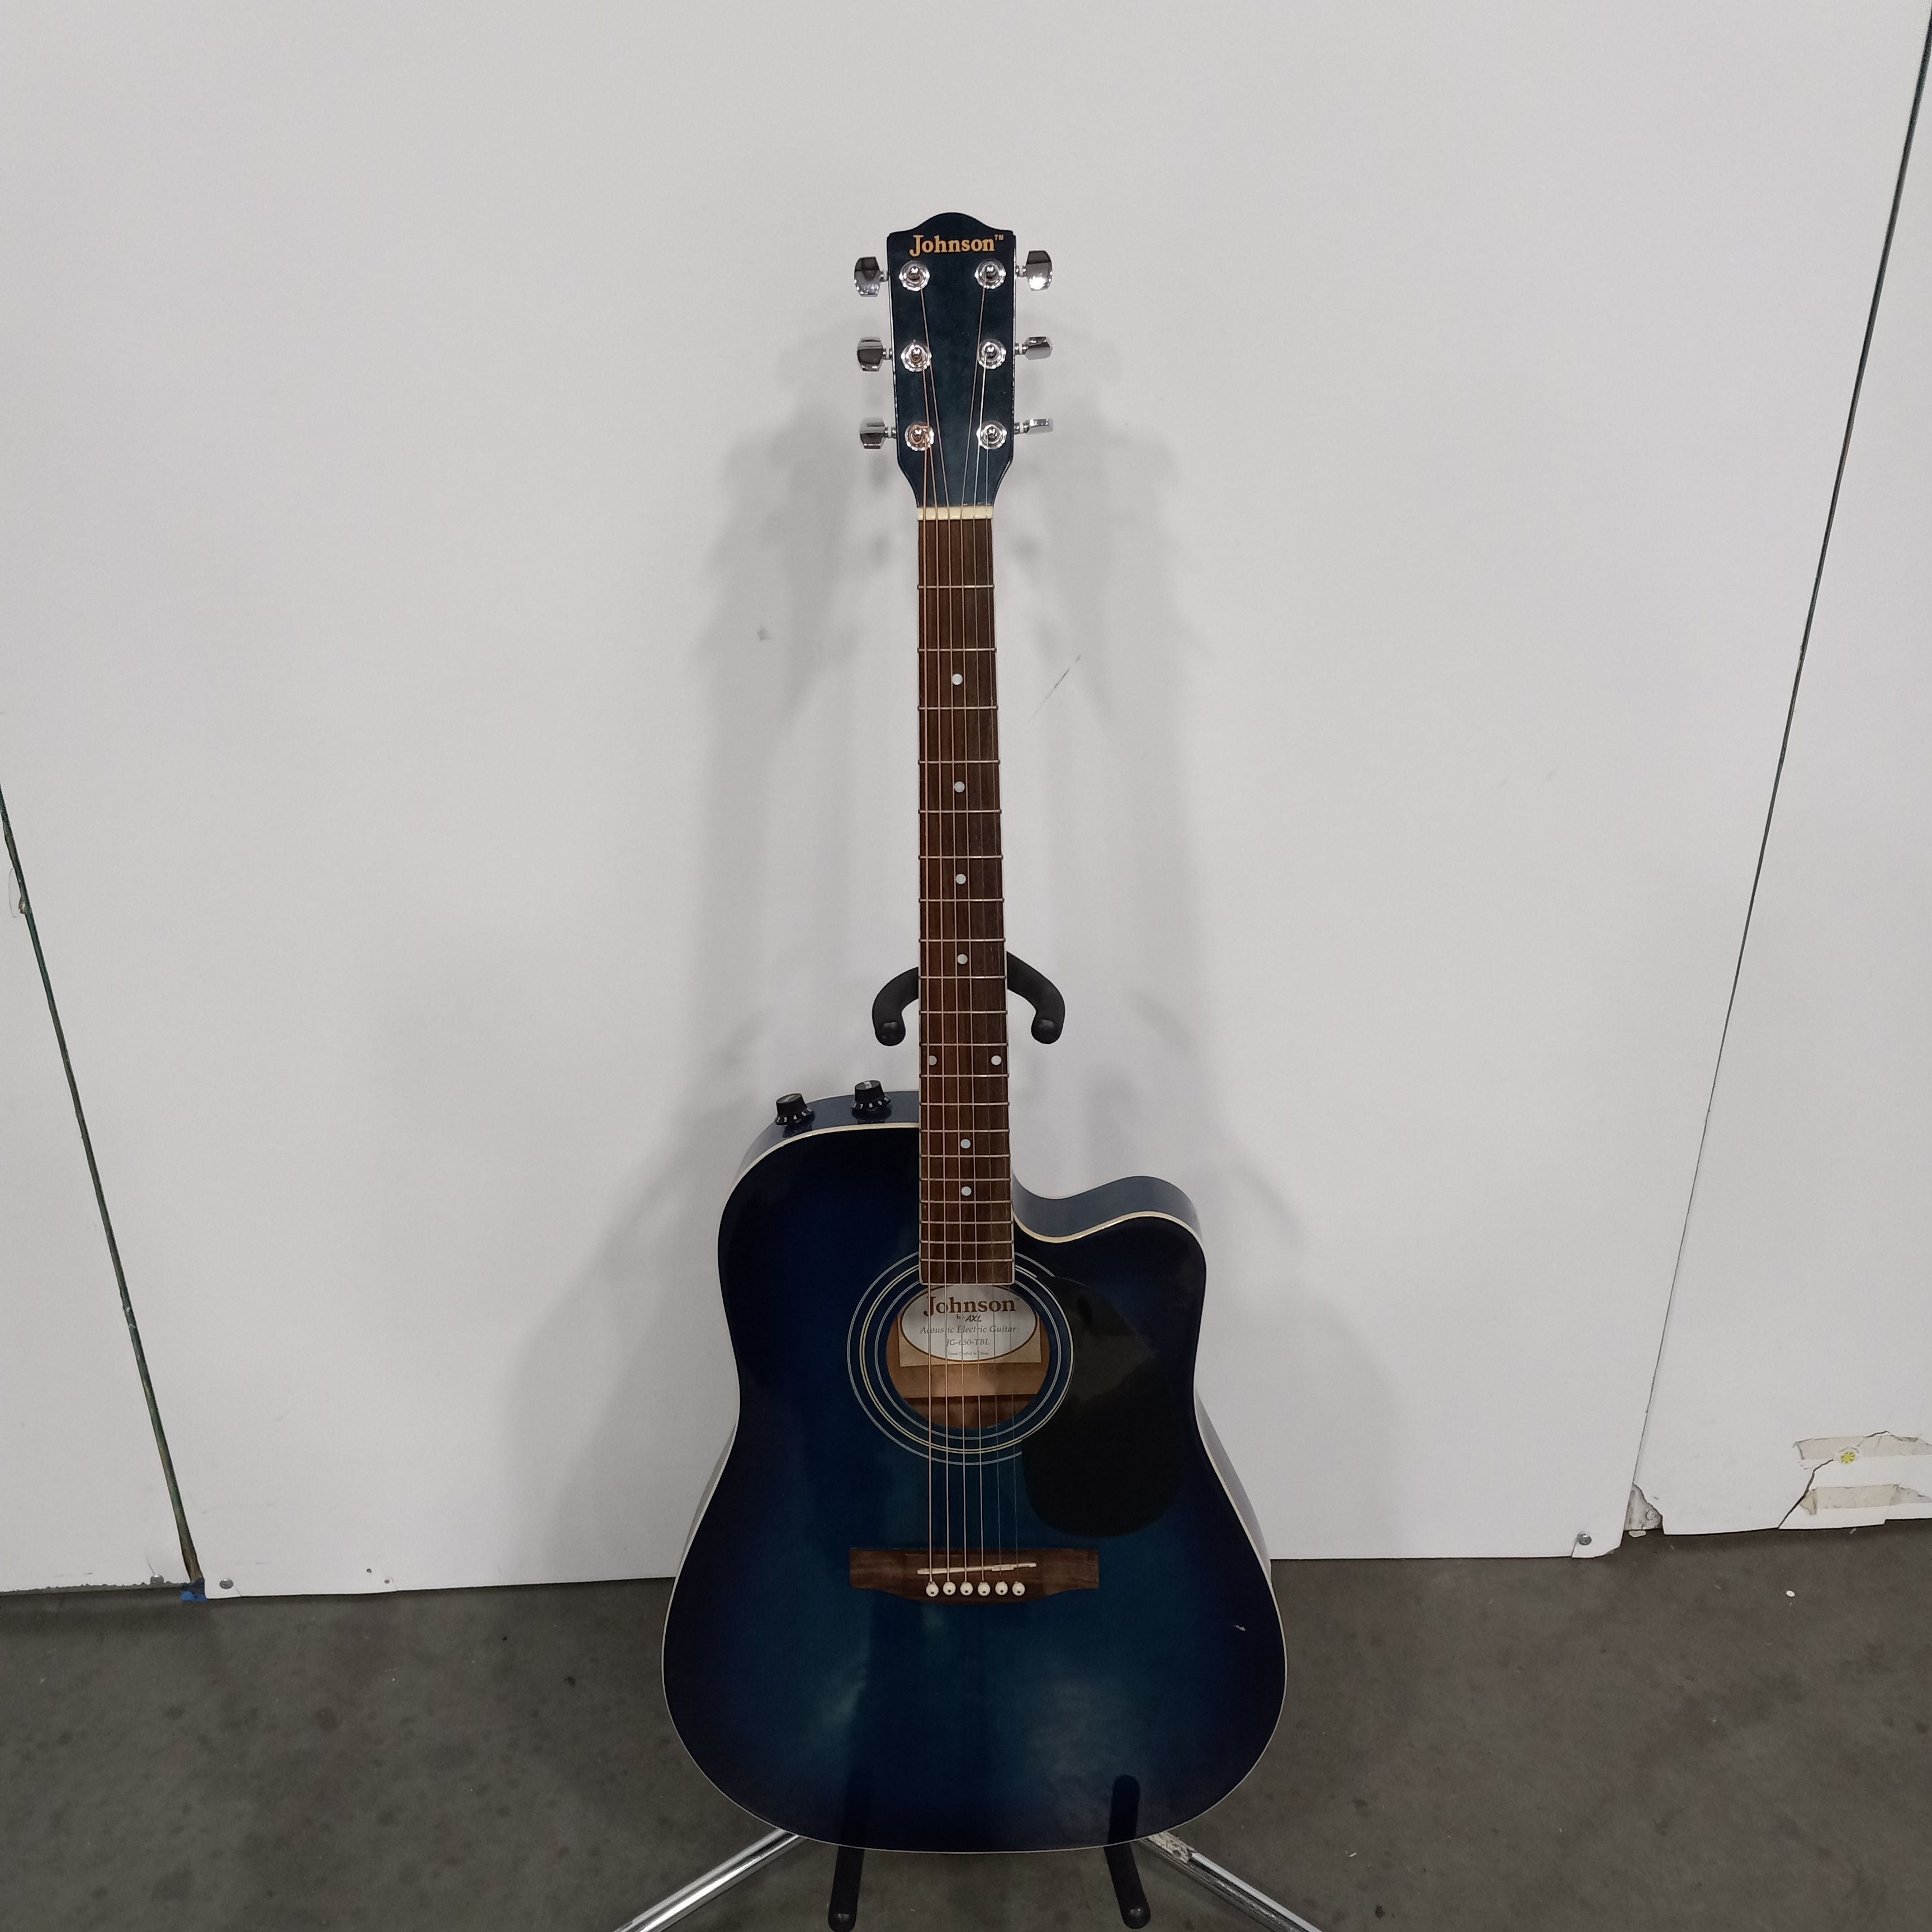 Buy Blue Acoustic Johnson Guitar jg-650-tbl for USD 99.99 | GoodwillFinds